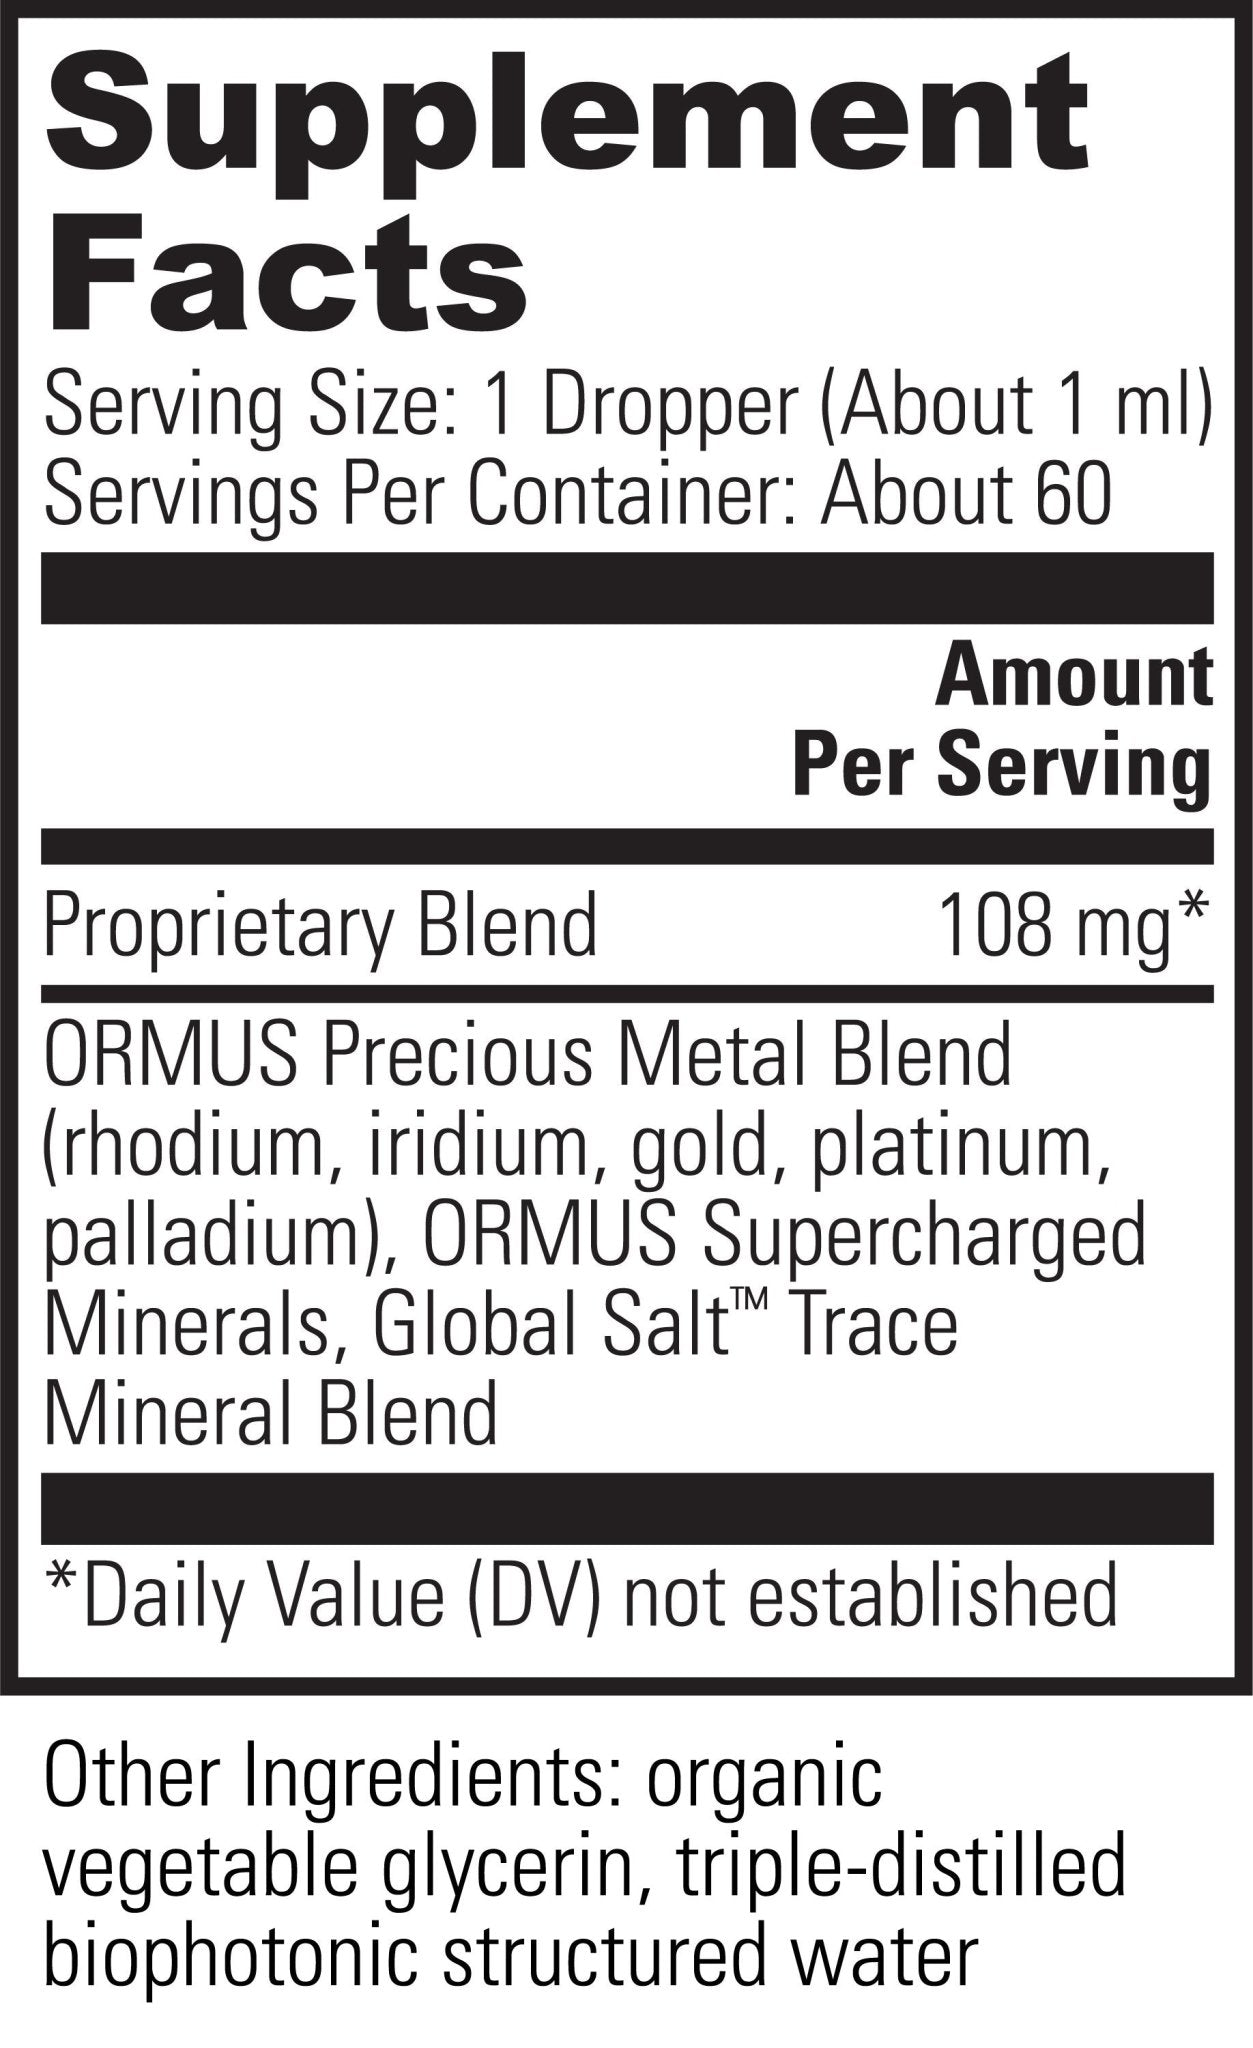 ORMUS Earth Minerals™ 2oz - Tree Spirit Wellness